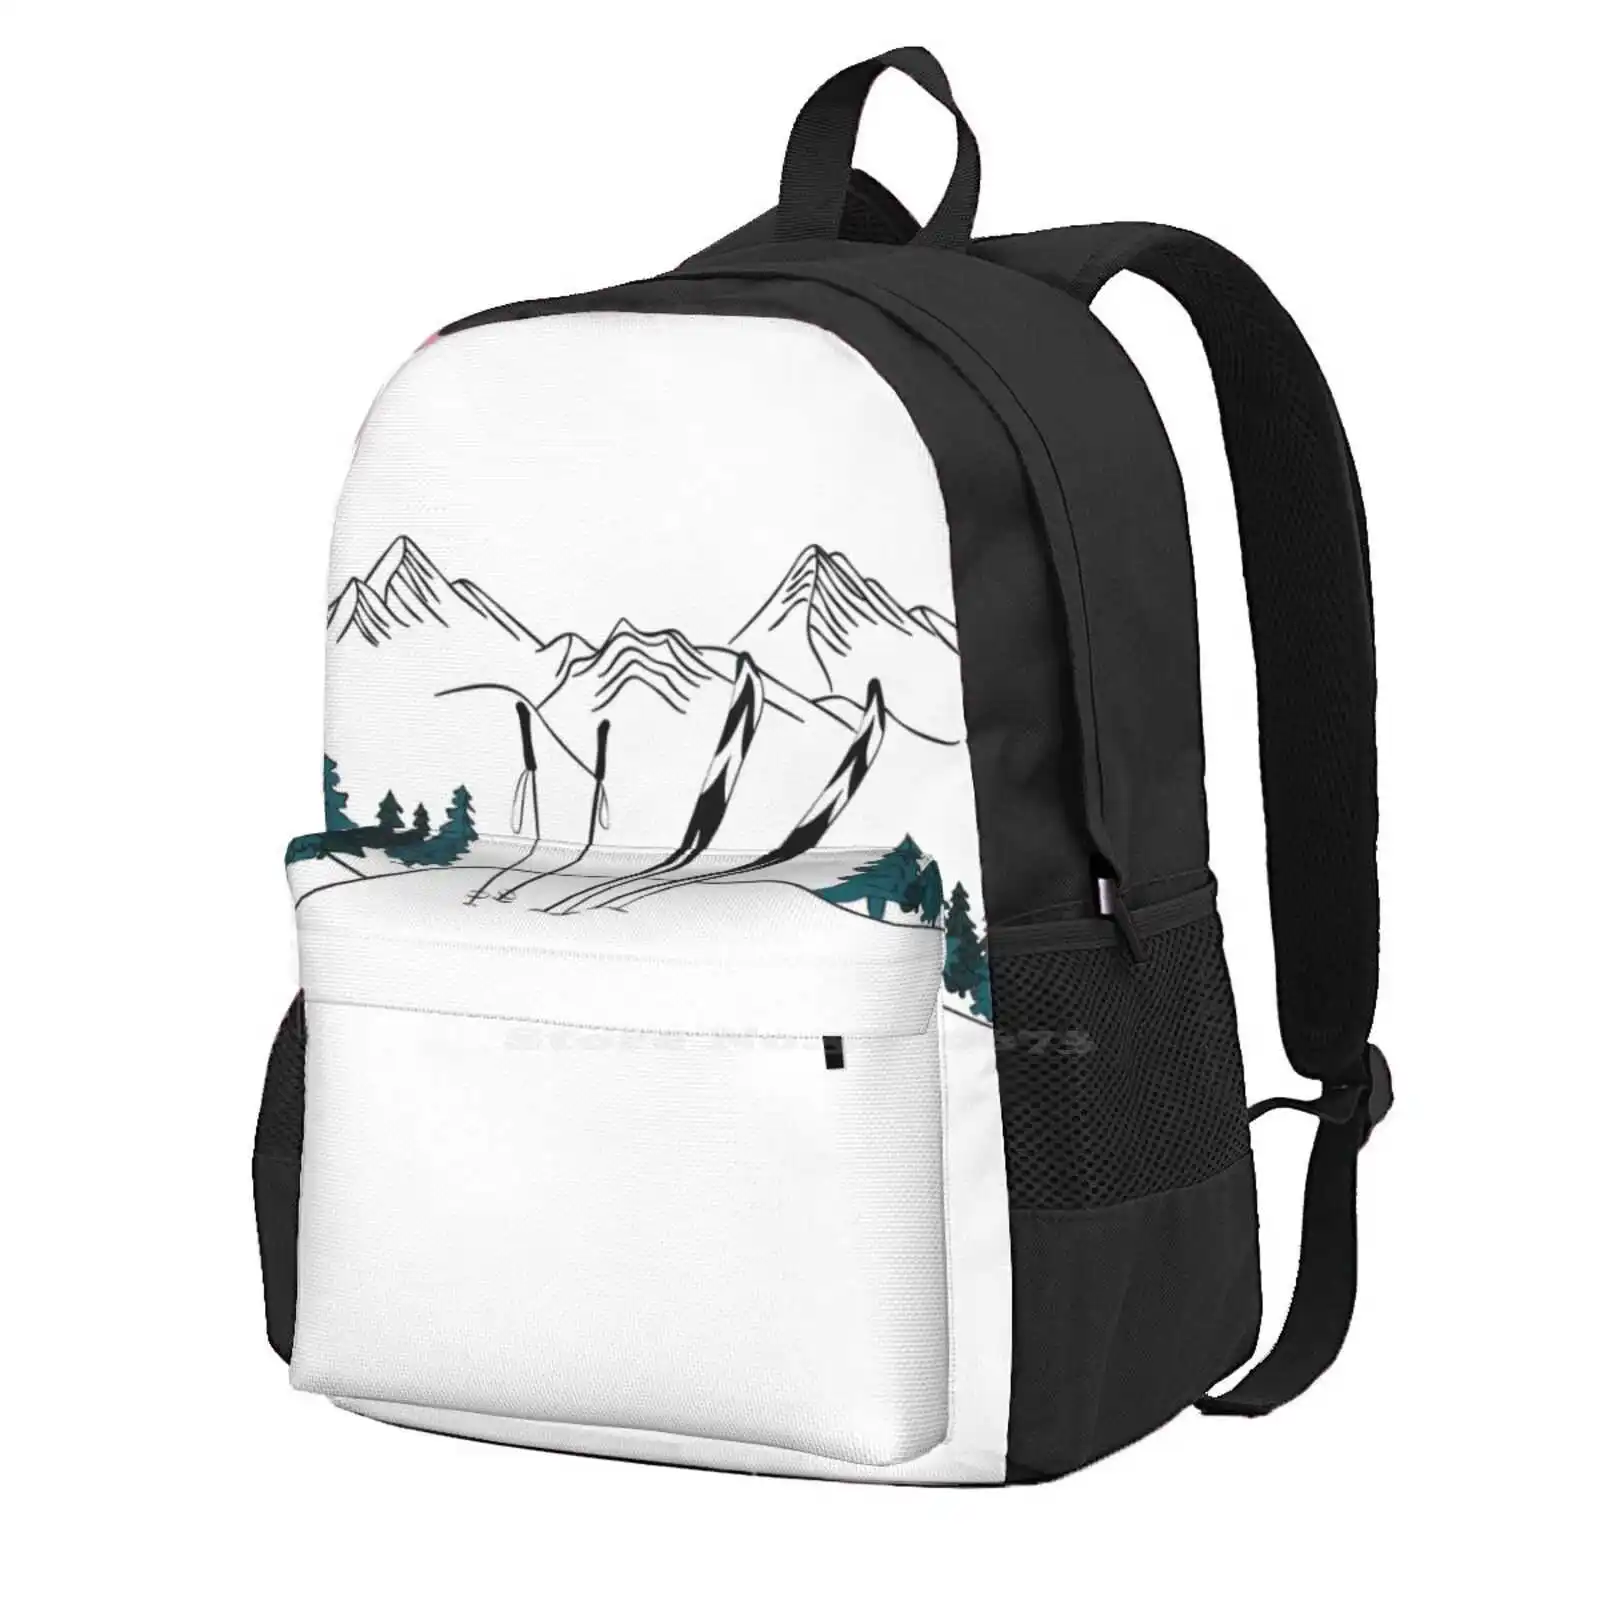 

Ski You Later Winter Sports Scene Backpack For Student School Laptop Travel Bag Born To Ski Ski You Later Skis Skier Skiing